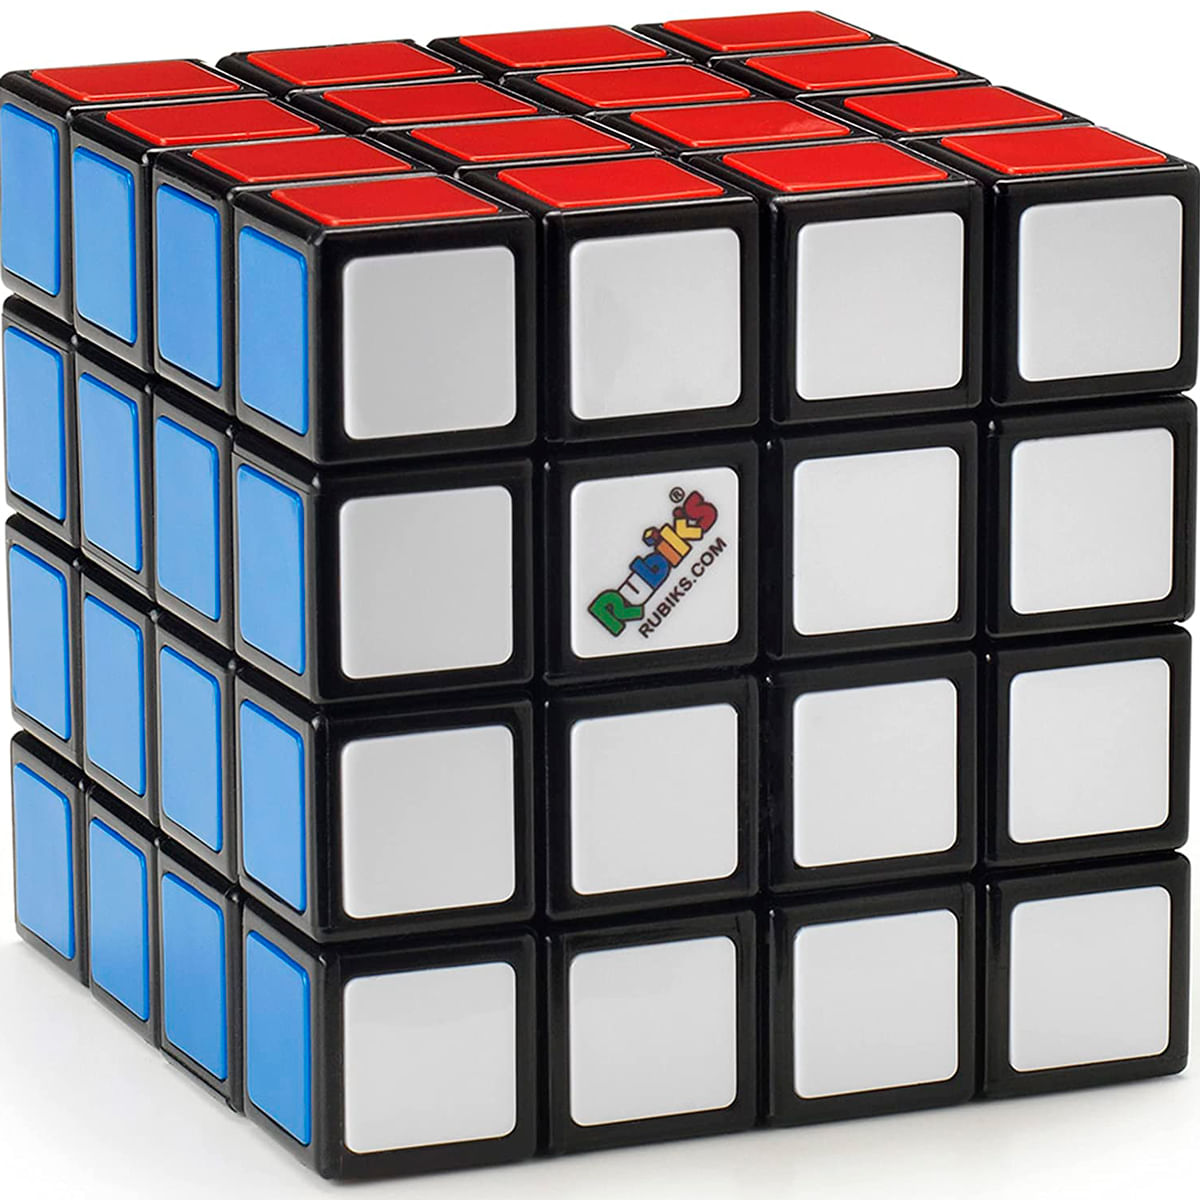 Cubo De Rubik 4x4 Precio Rubik's Master Cubo 4x4